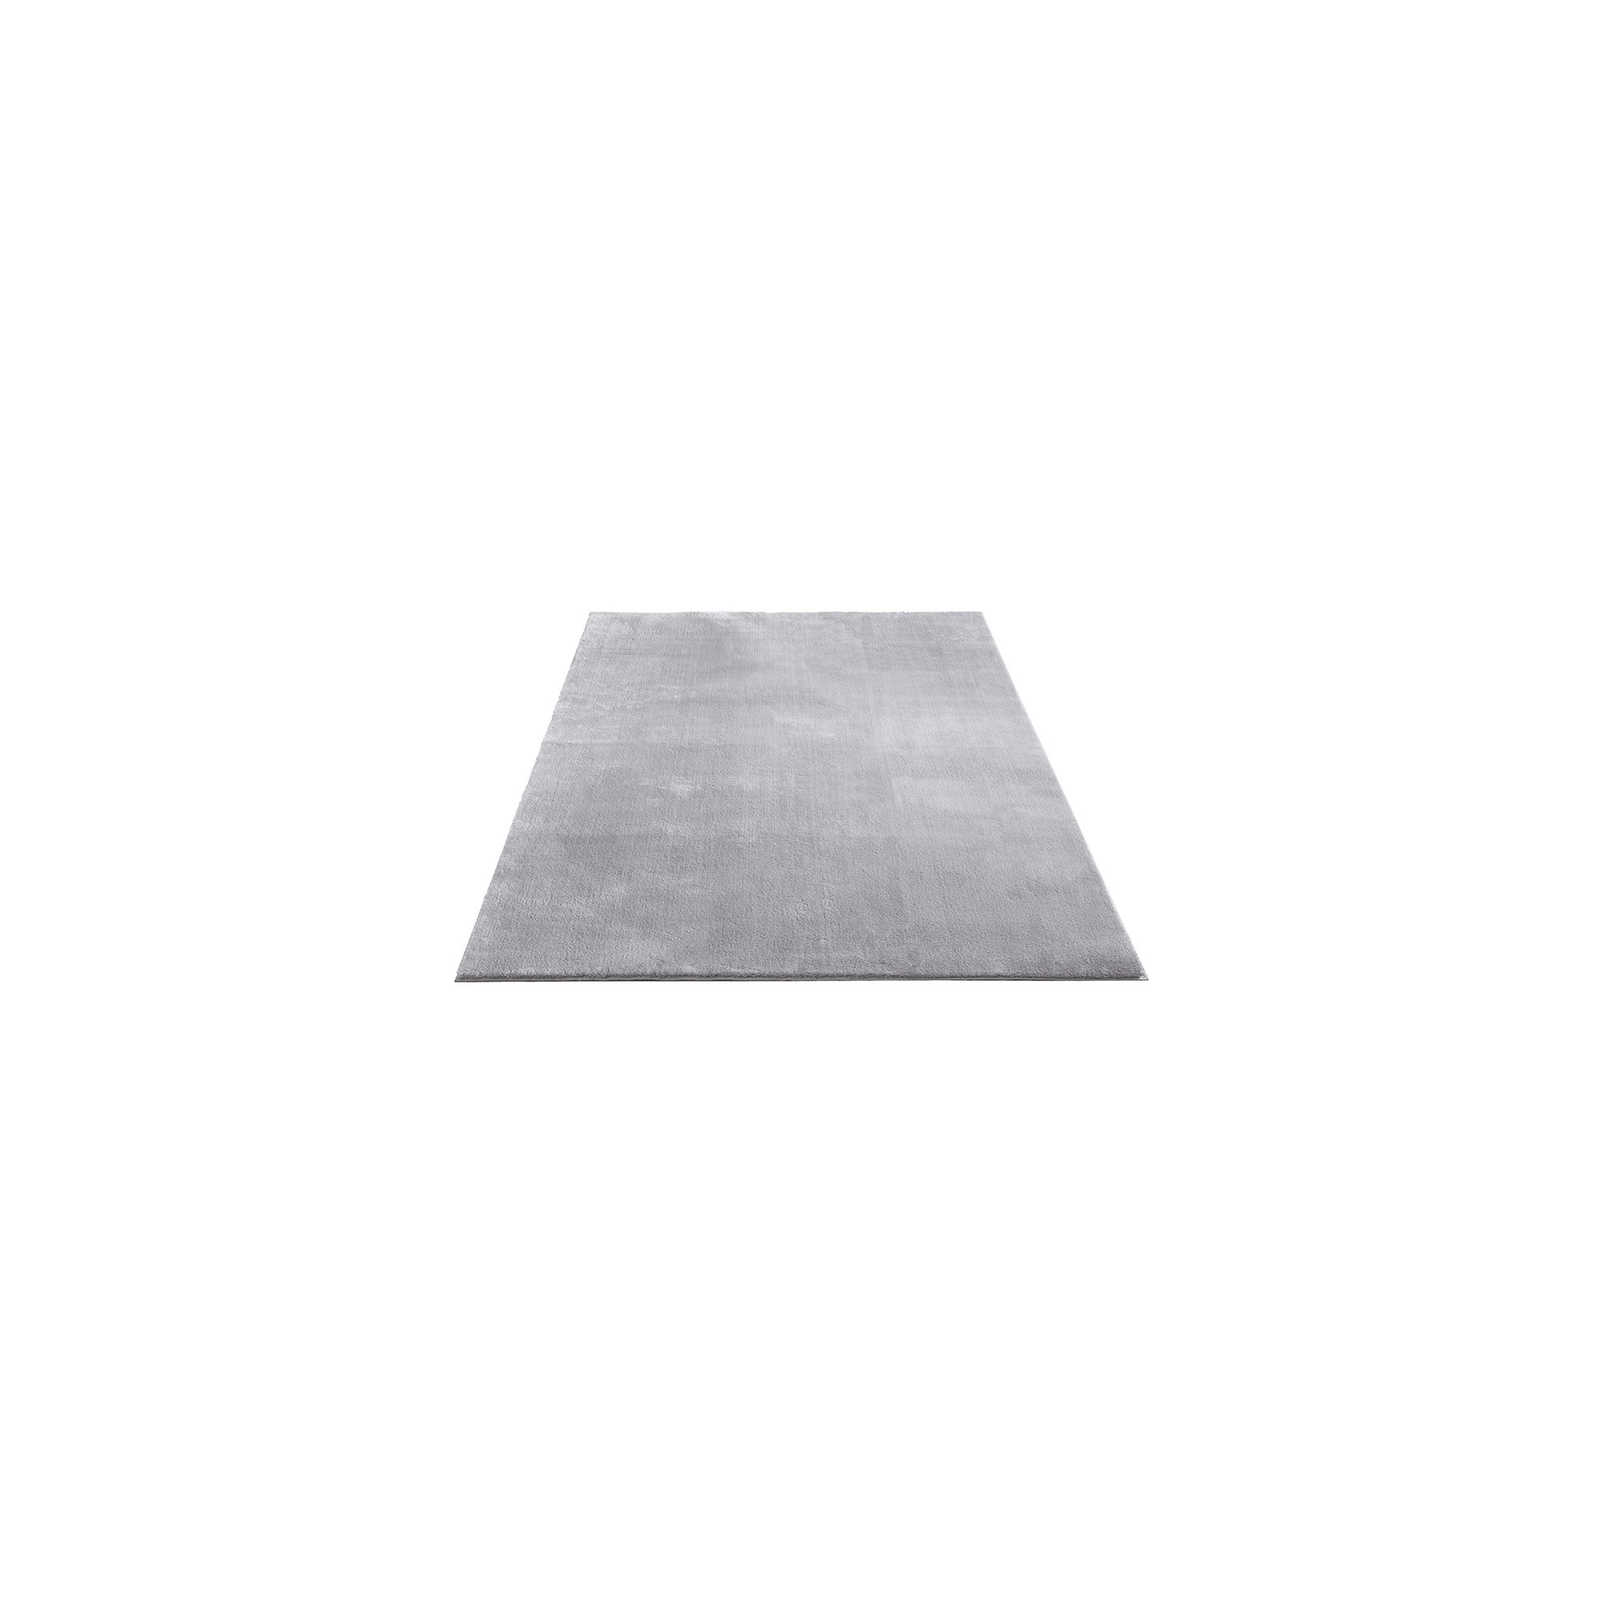 Feiner Hochflor Teppich in Grau – 150 x 80 cm
